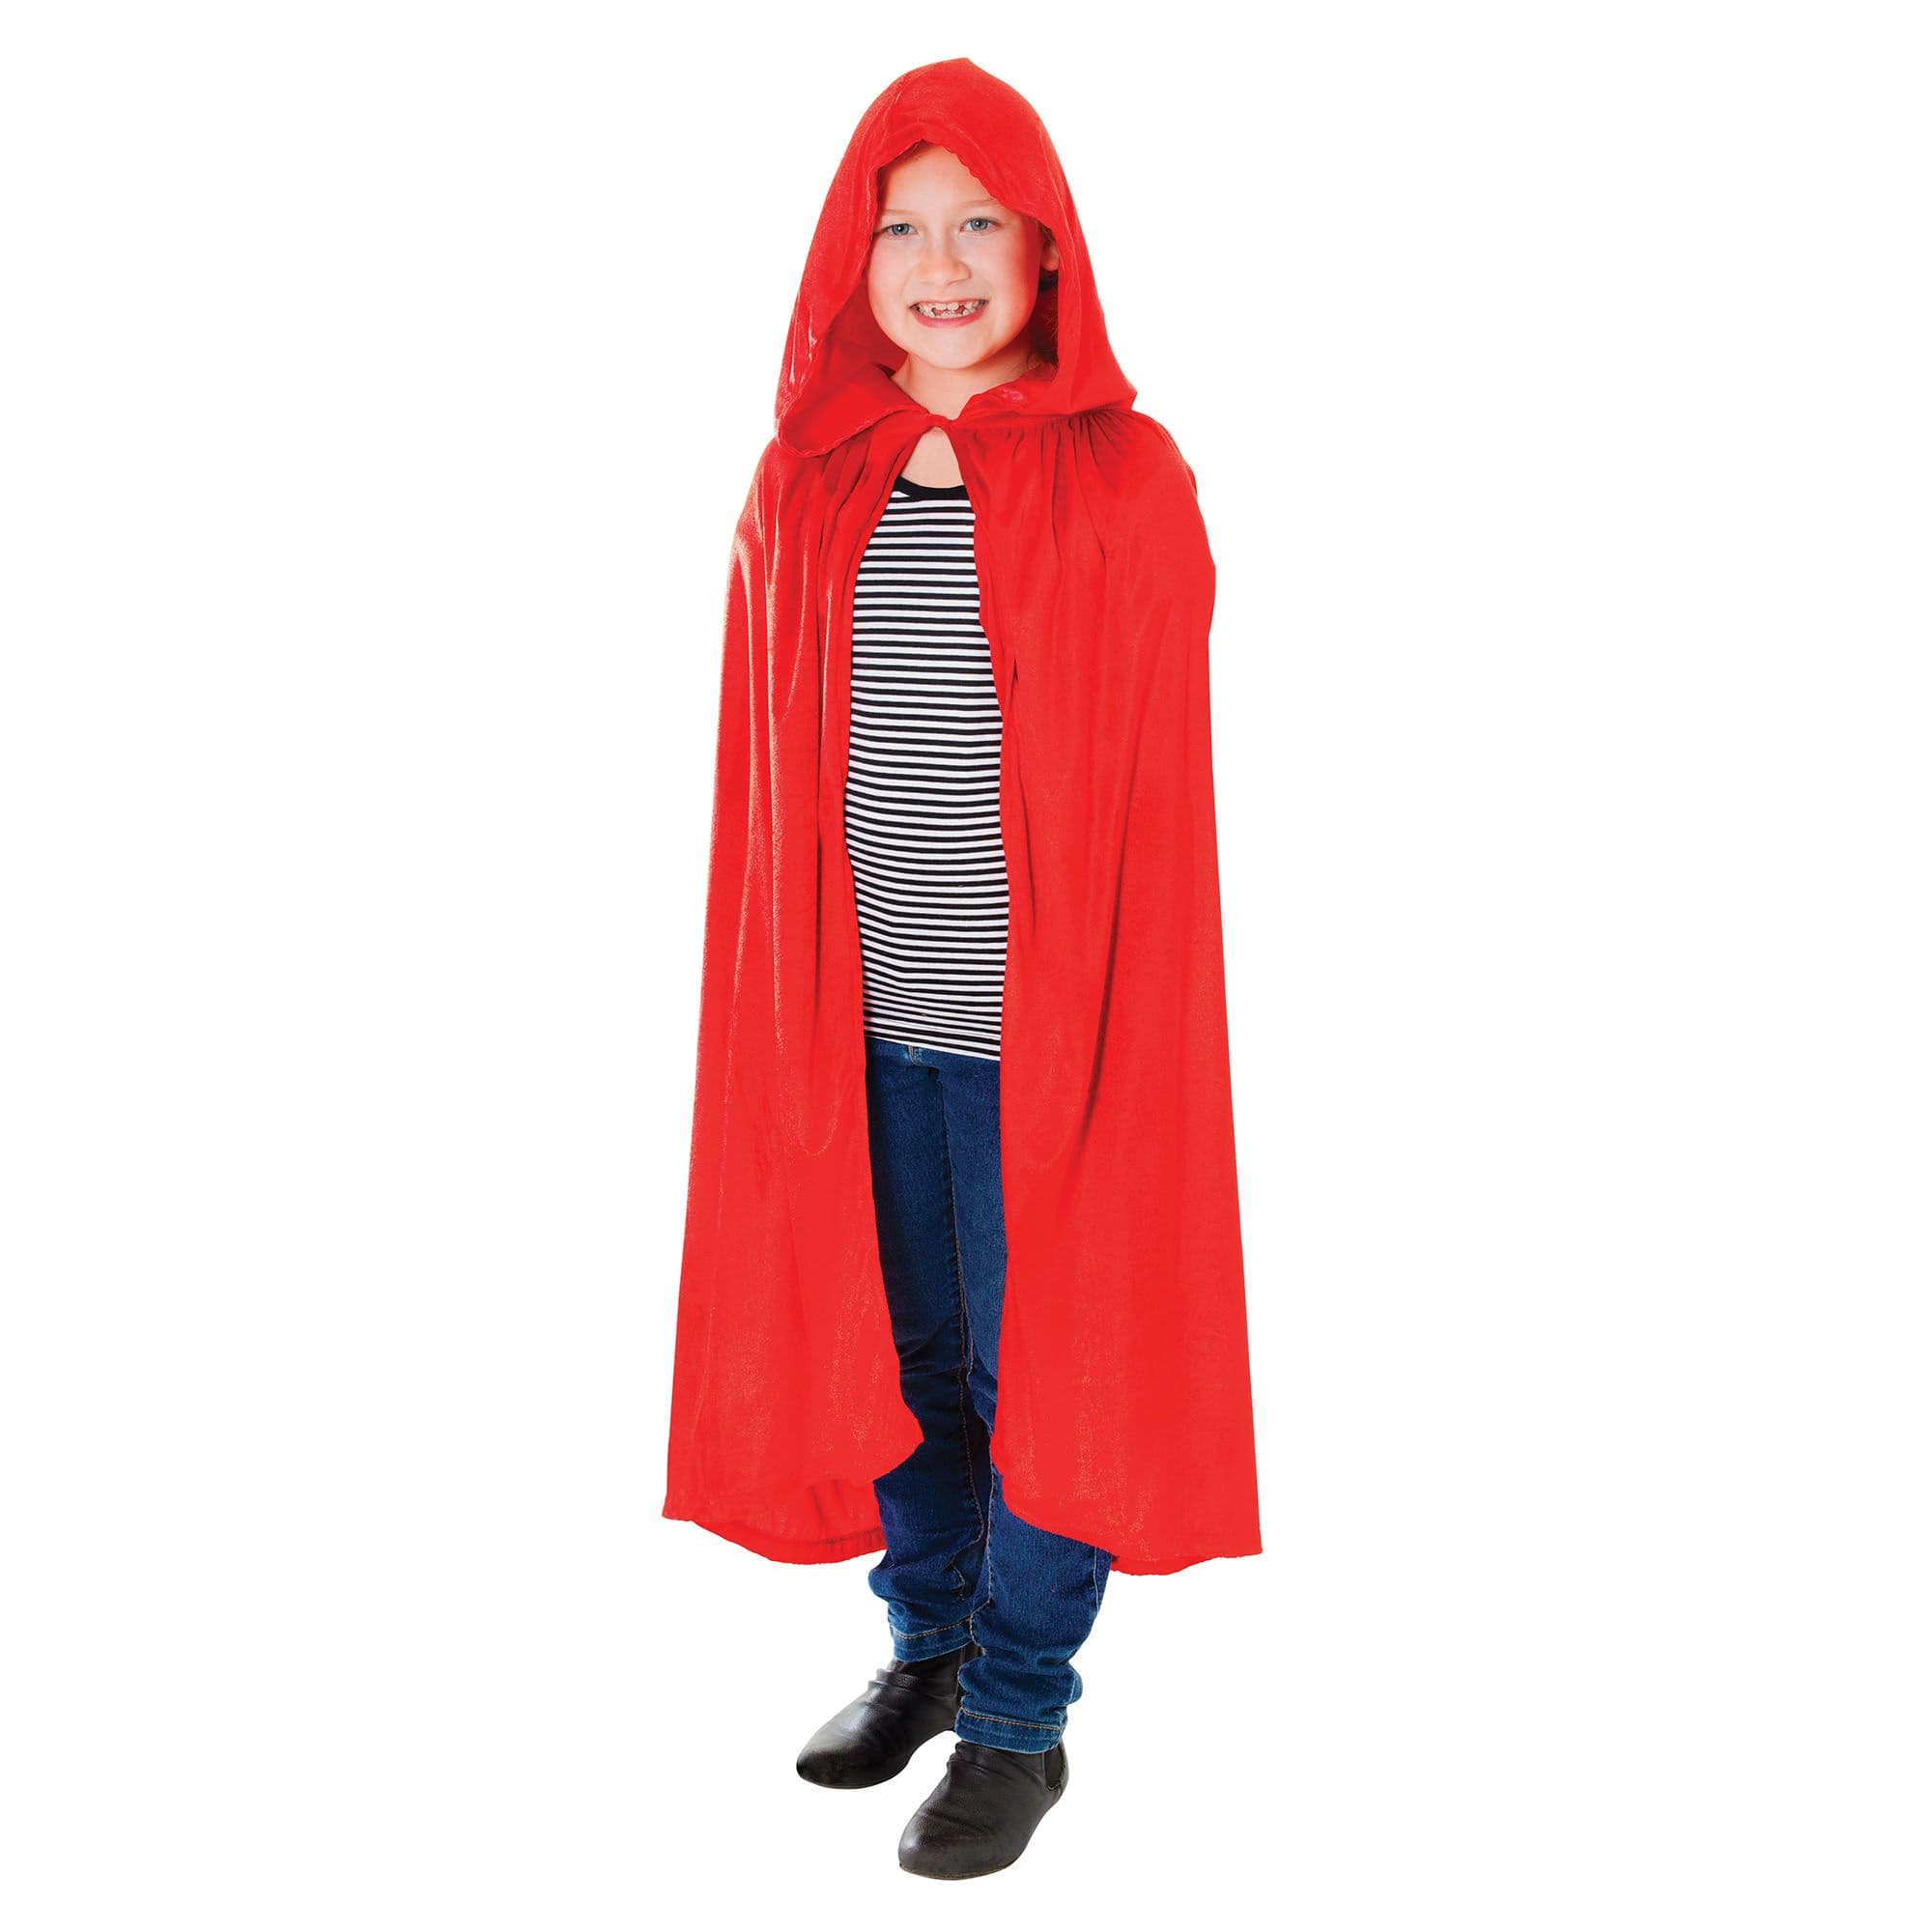 Childrens Red Hooded Cloak Cape Costume